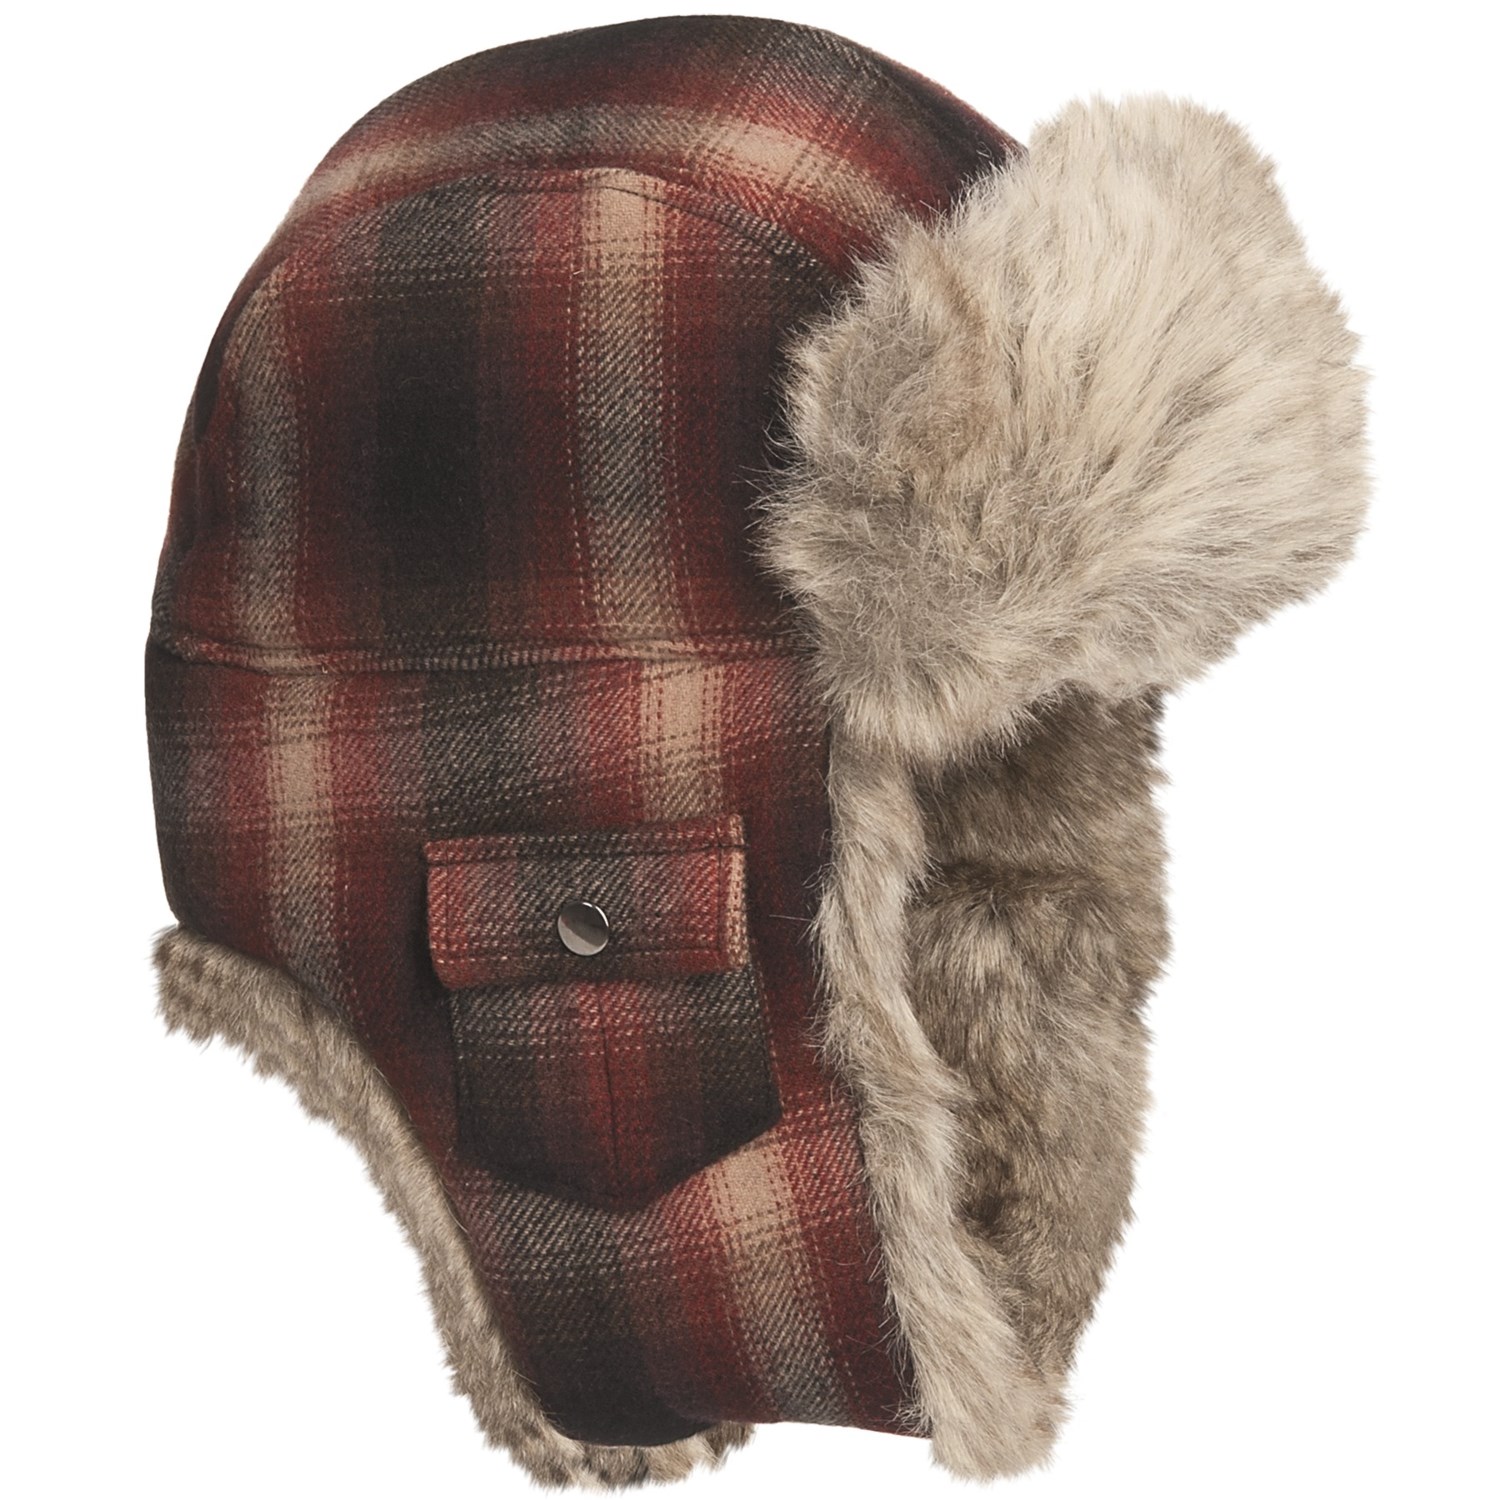 Woolrich Arctic Trooper Hat - Wool, Faux-Fur Trim, Ear Flaps (For Men)